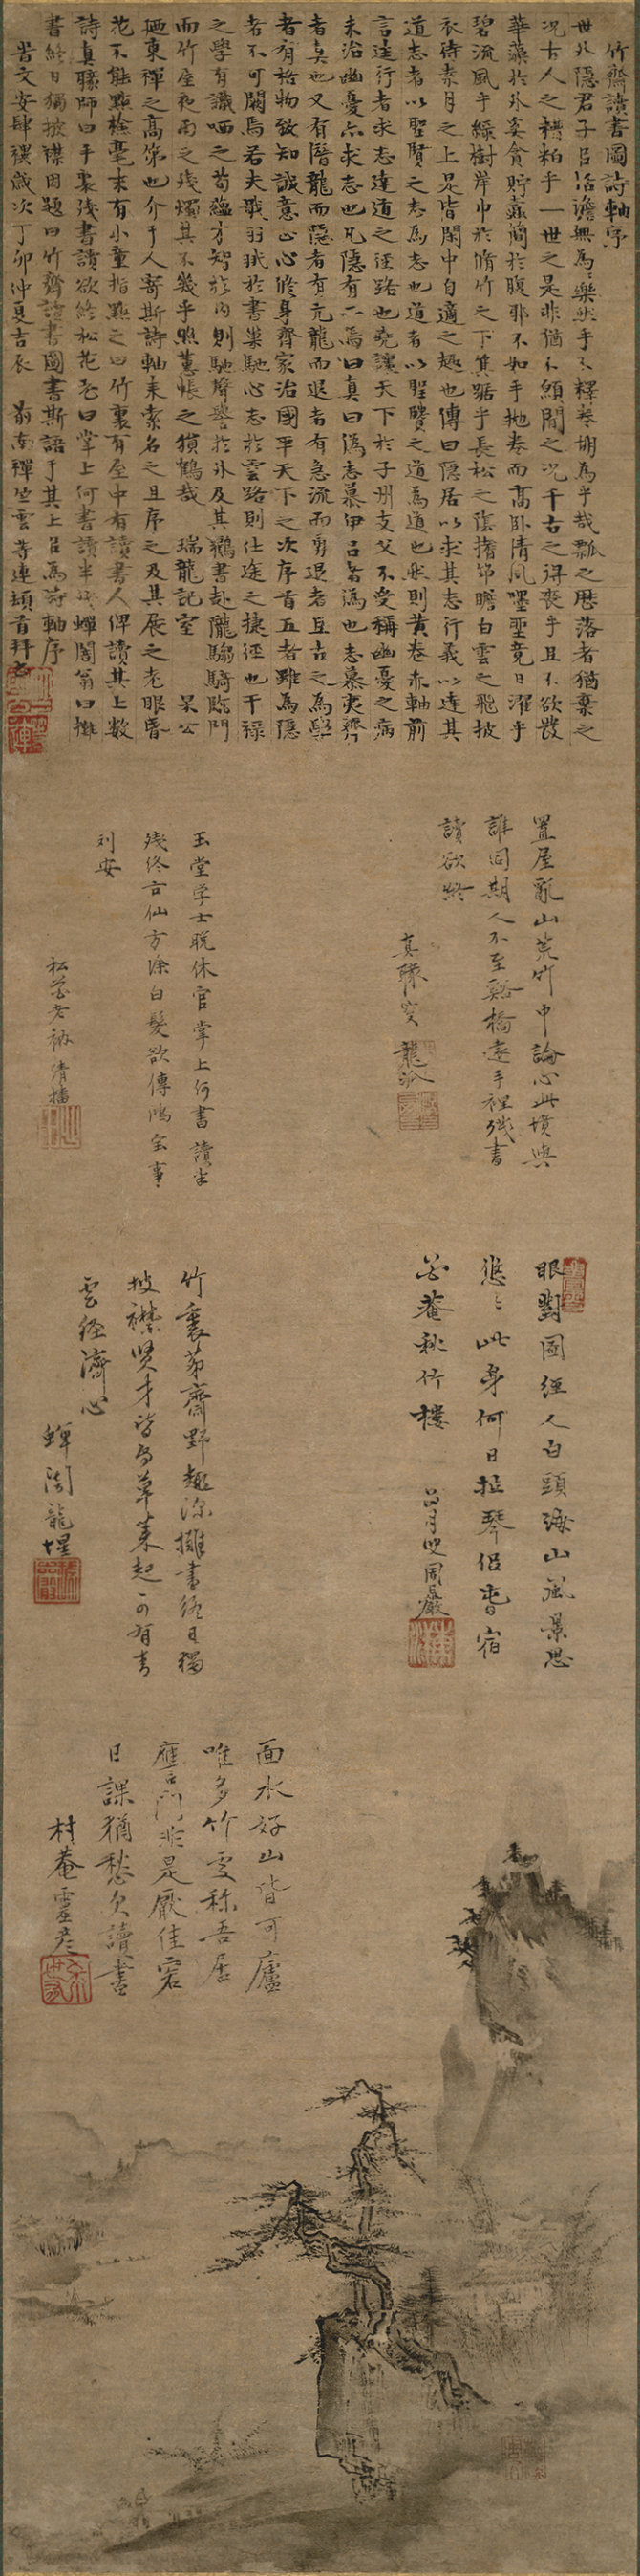 Image of "竹斋读书图"